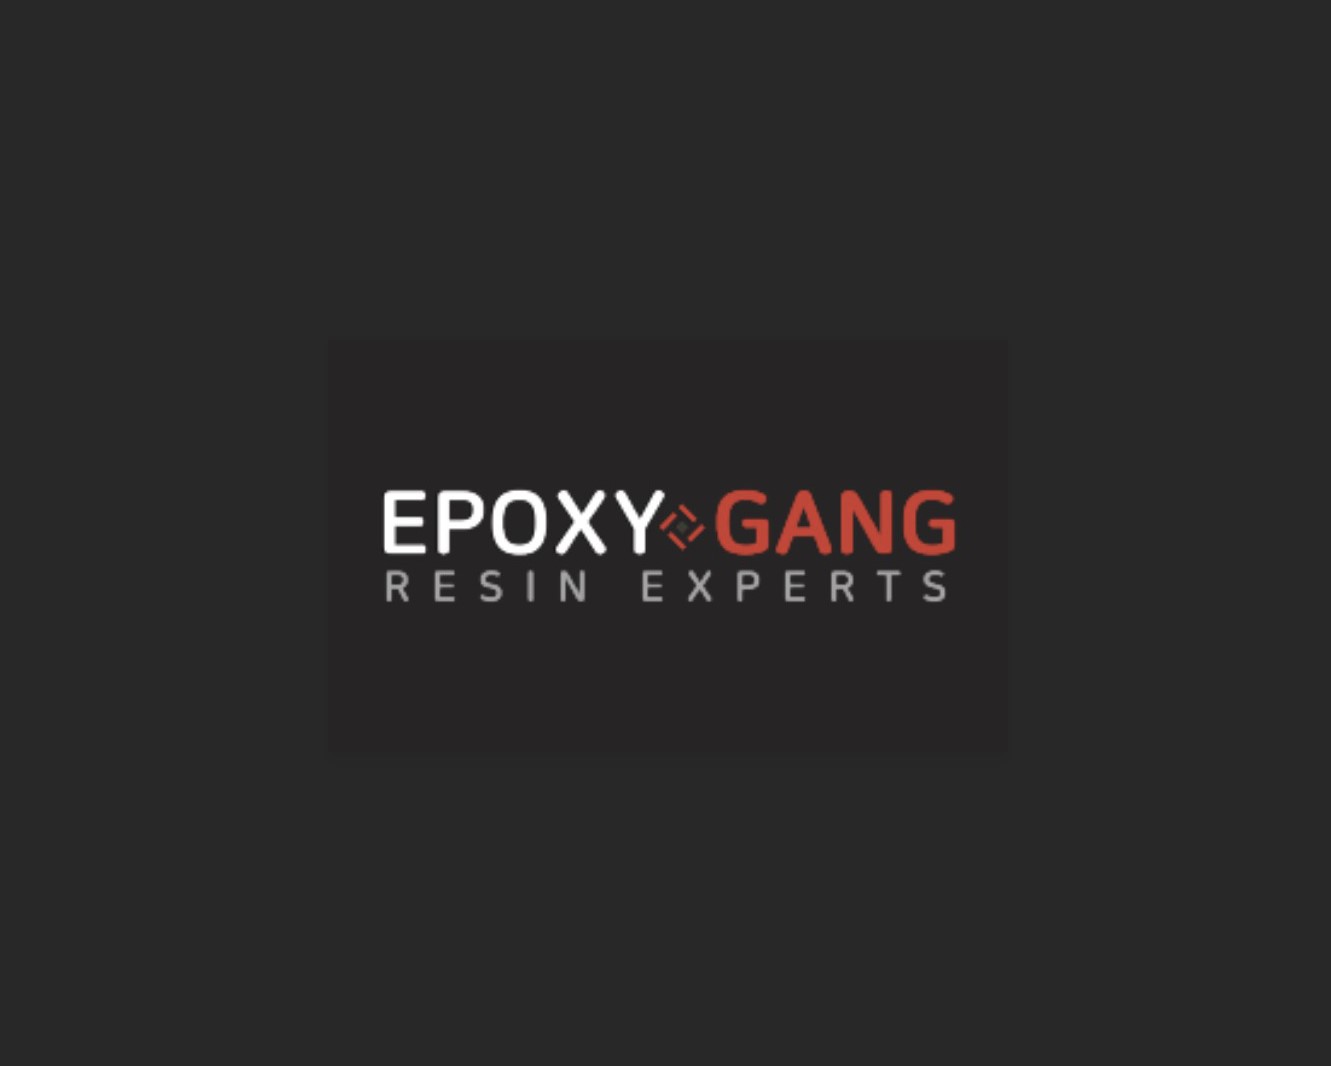 Epoxy Gang